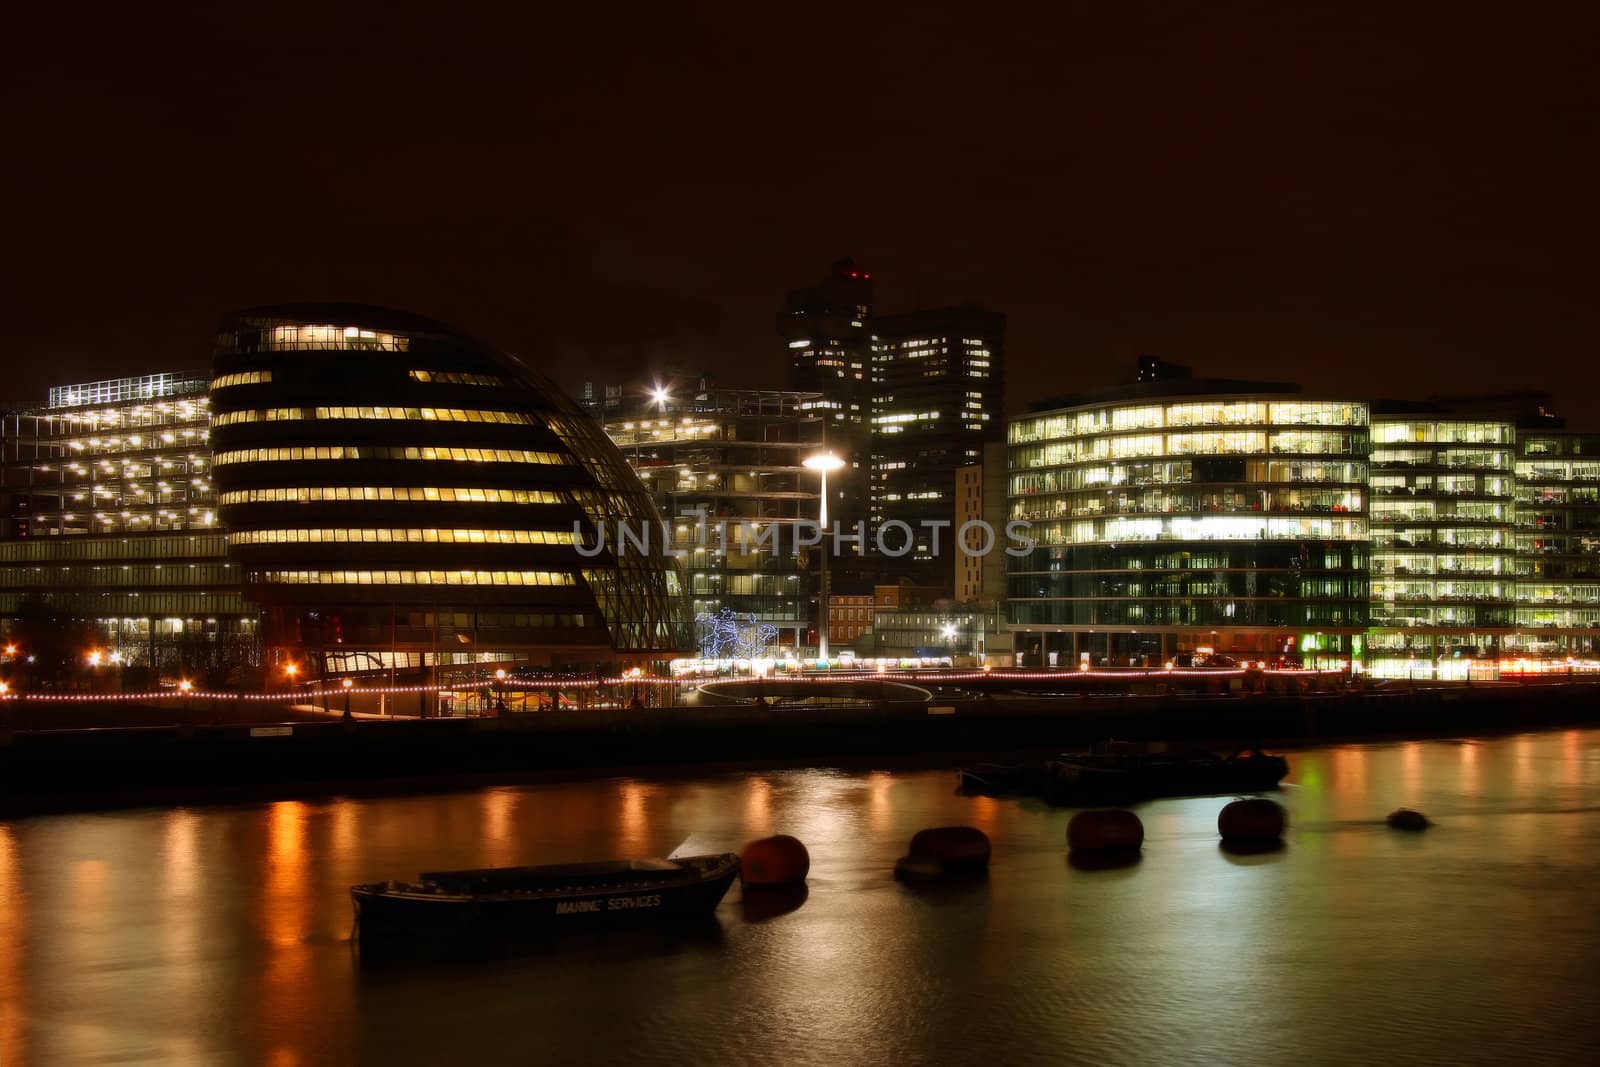 Night of London  U.K. by Imagecom